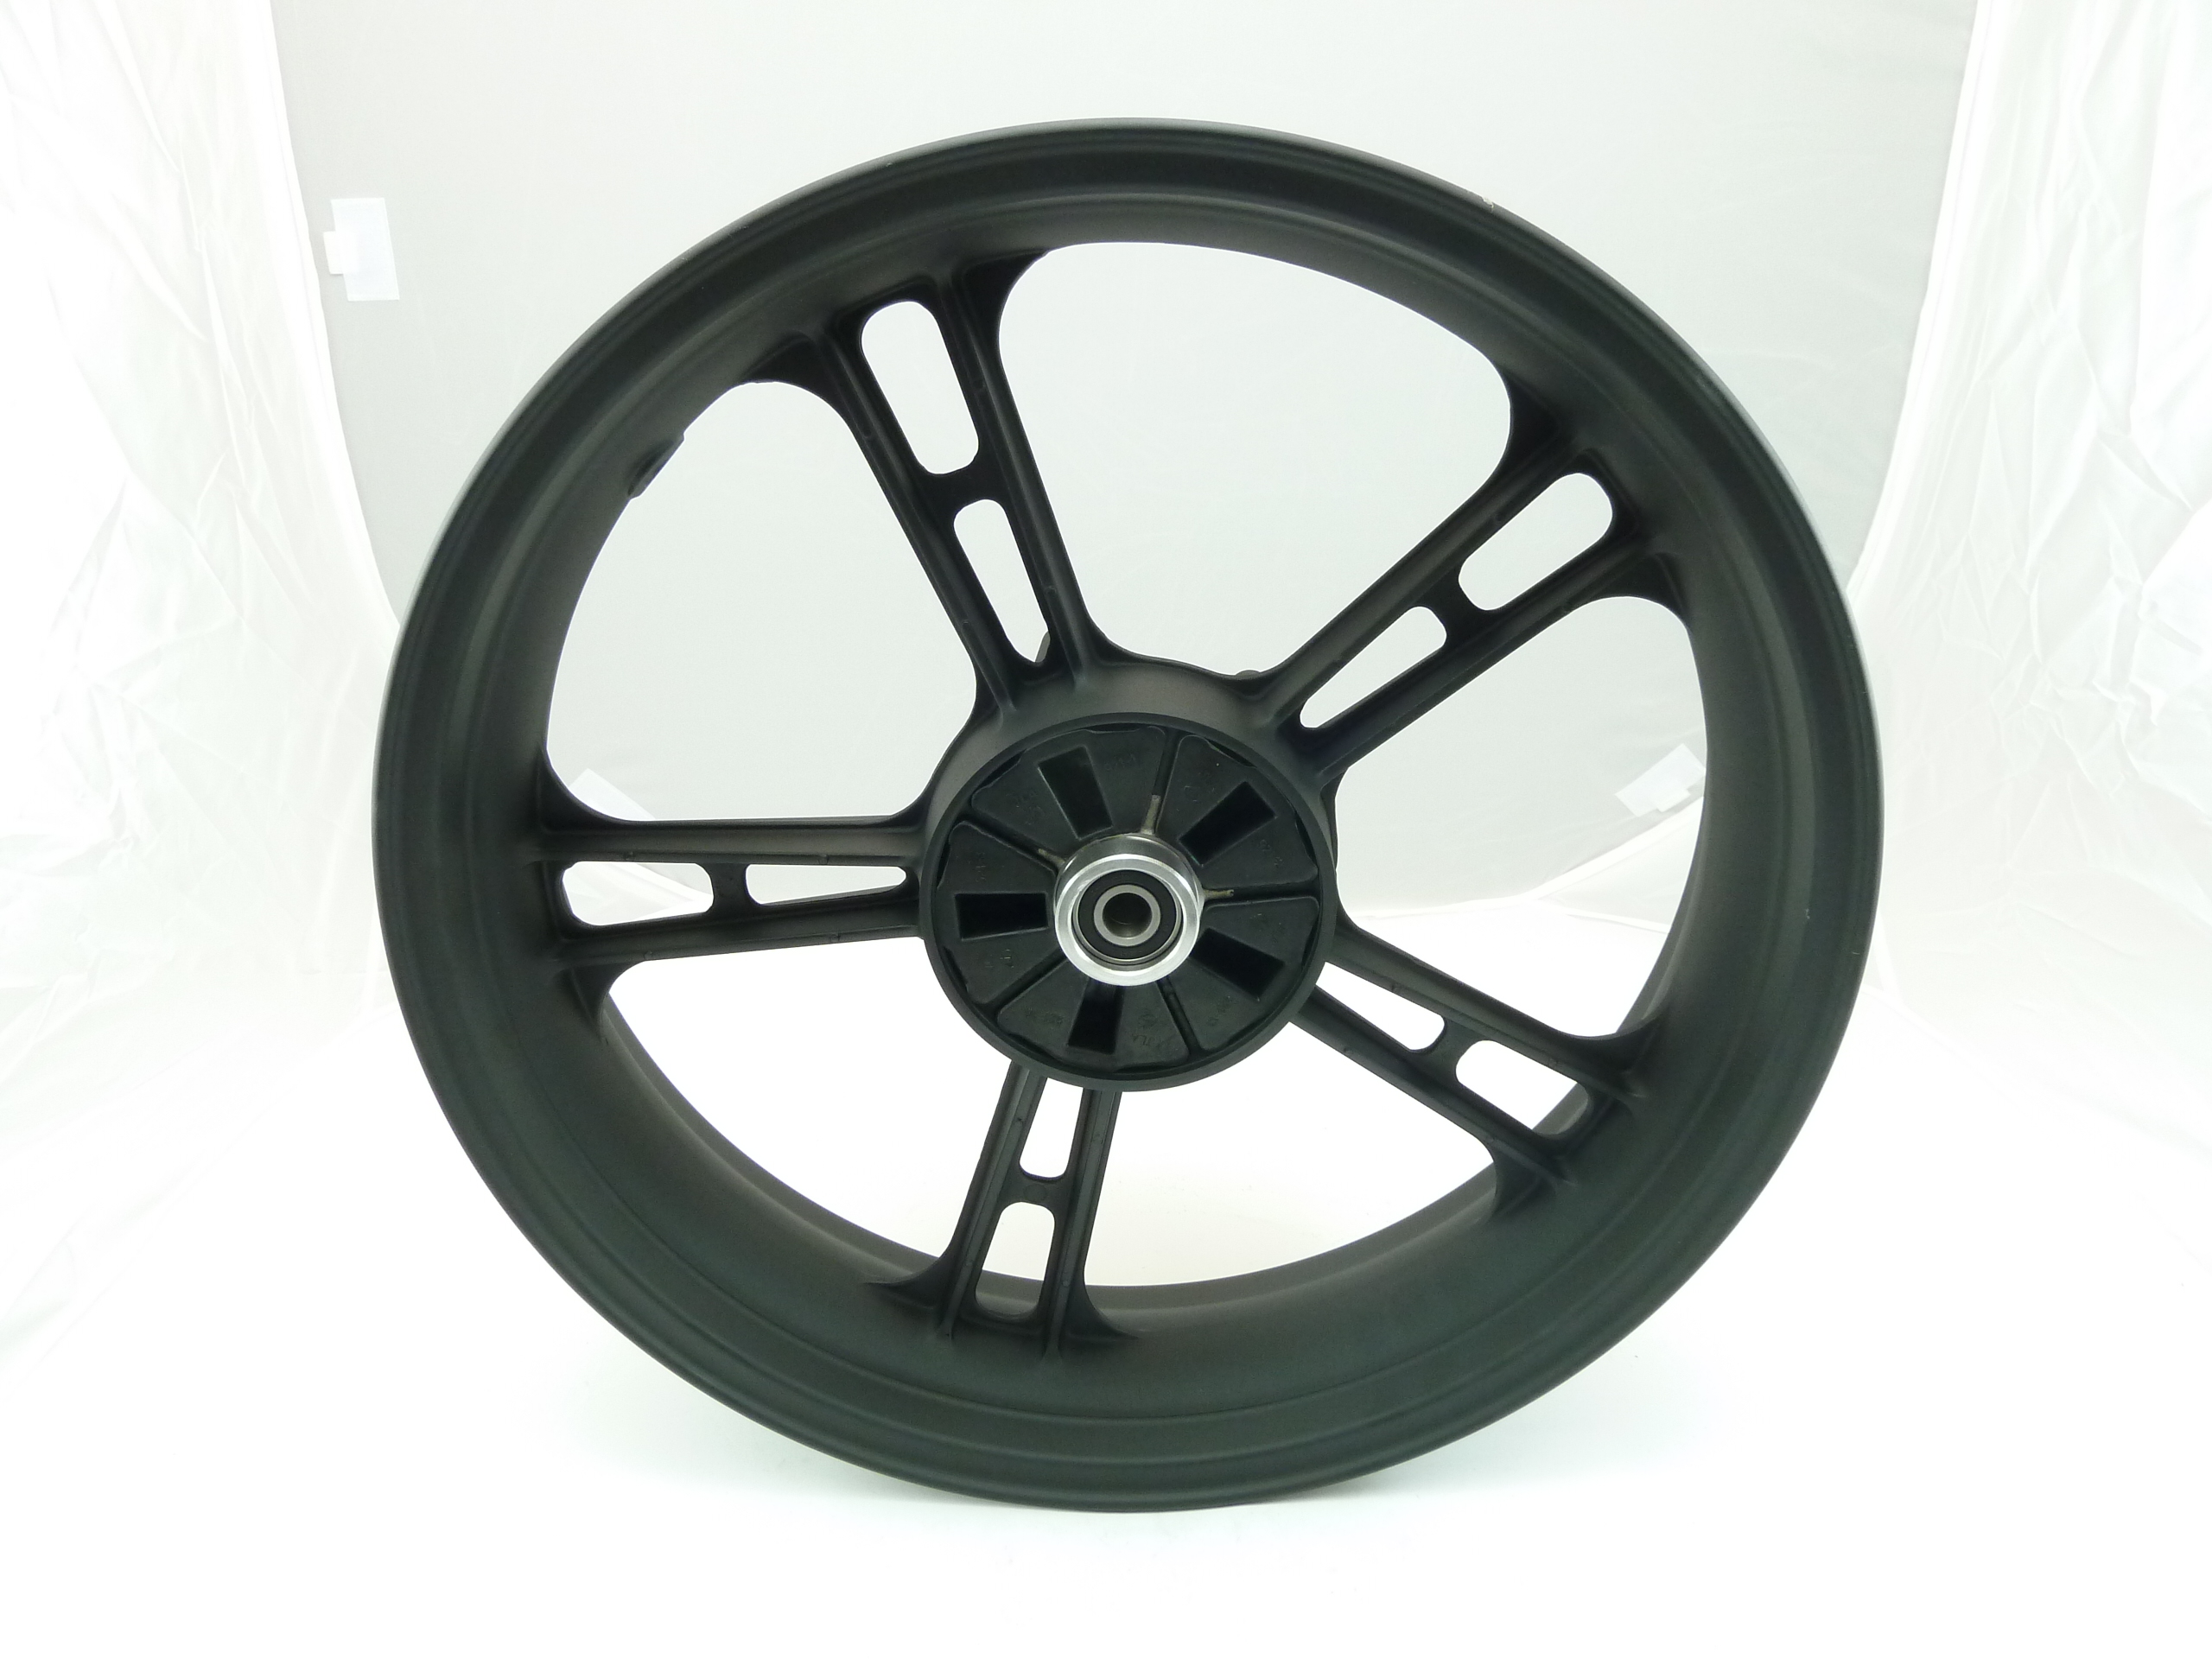 Genata XRZ XRN rear alloy wheel